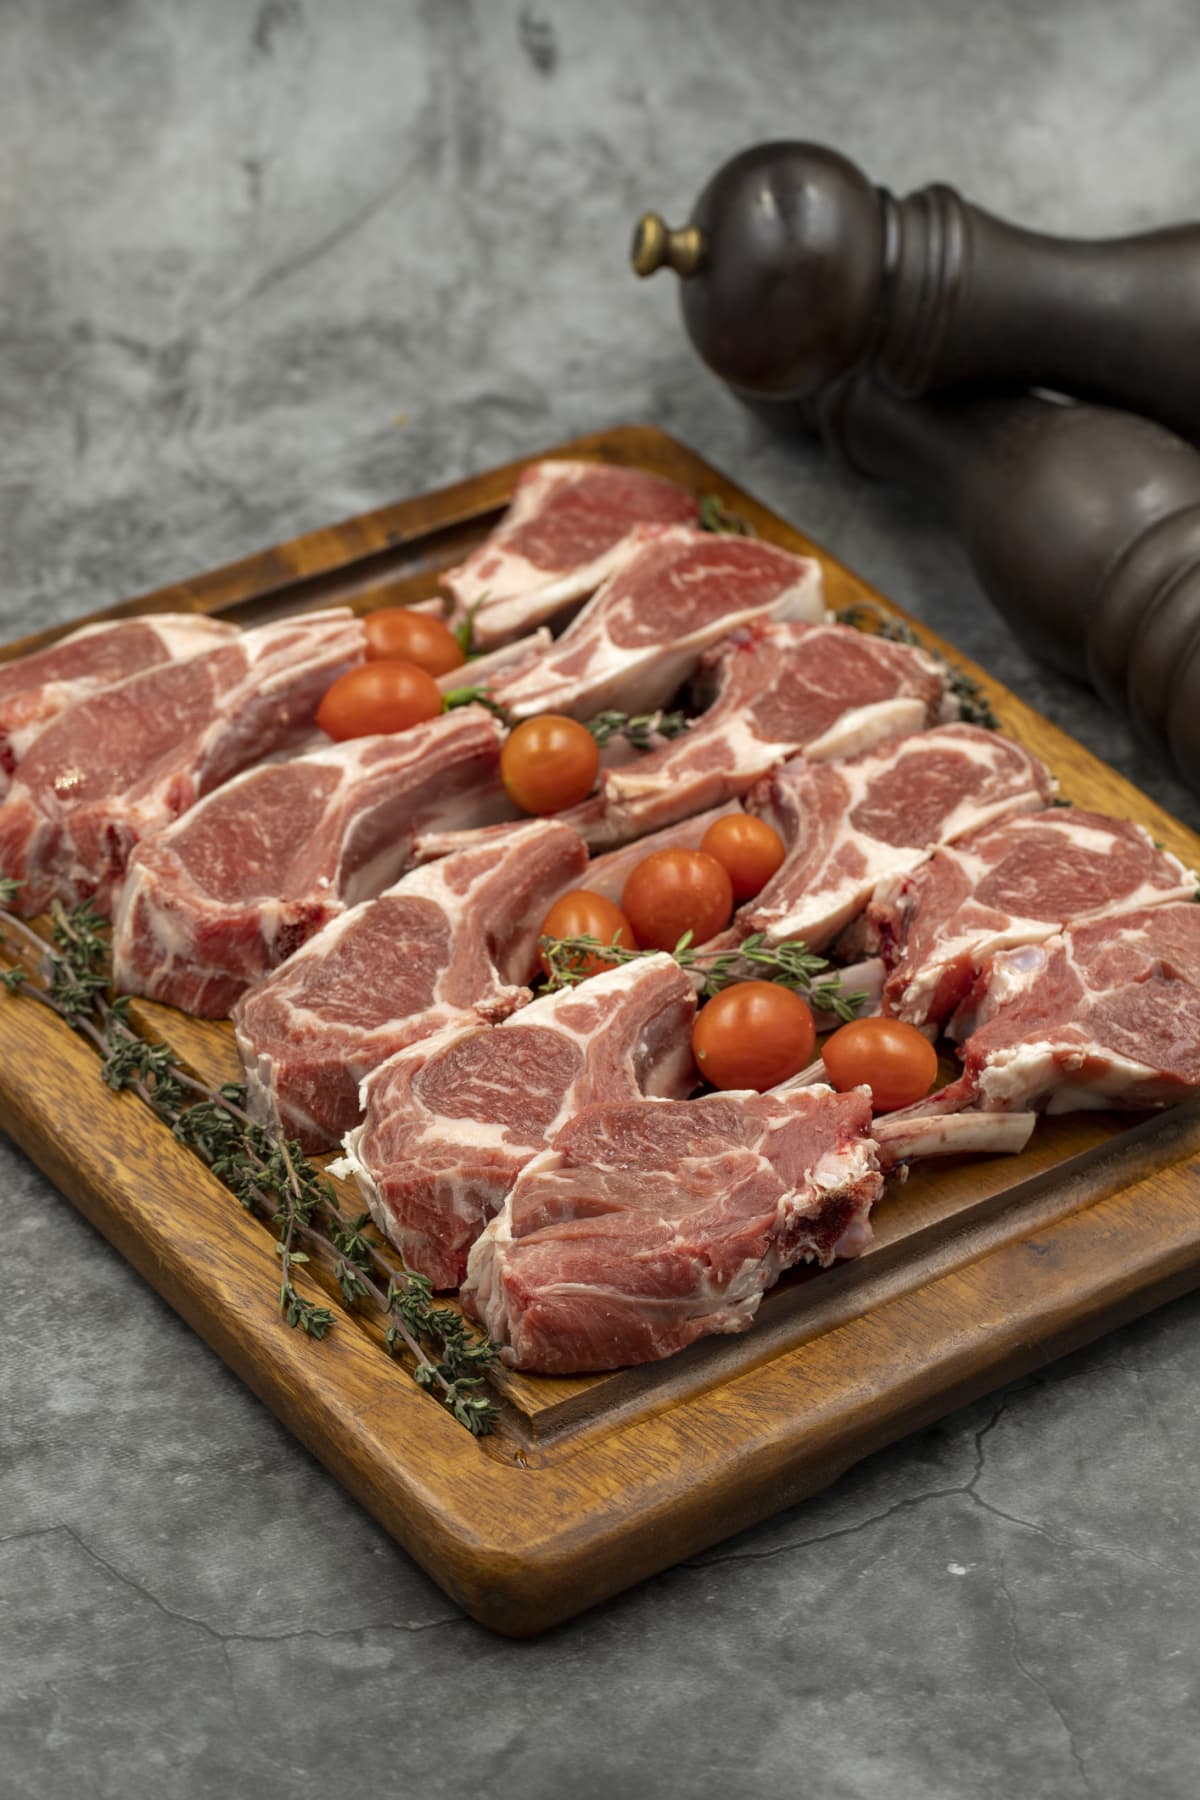 Lamb chops on dark background. Raw lamb chops on wood serving board